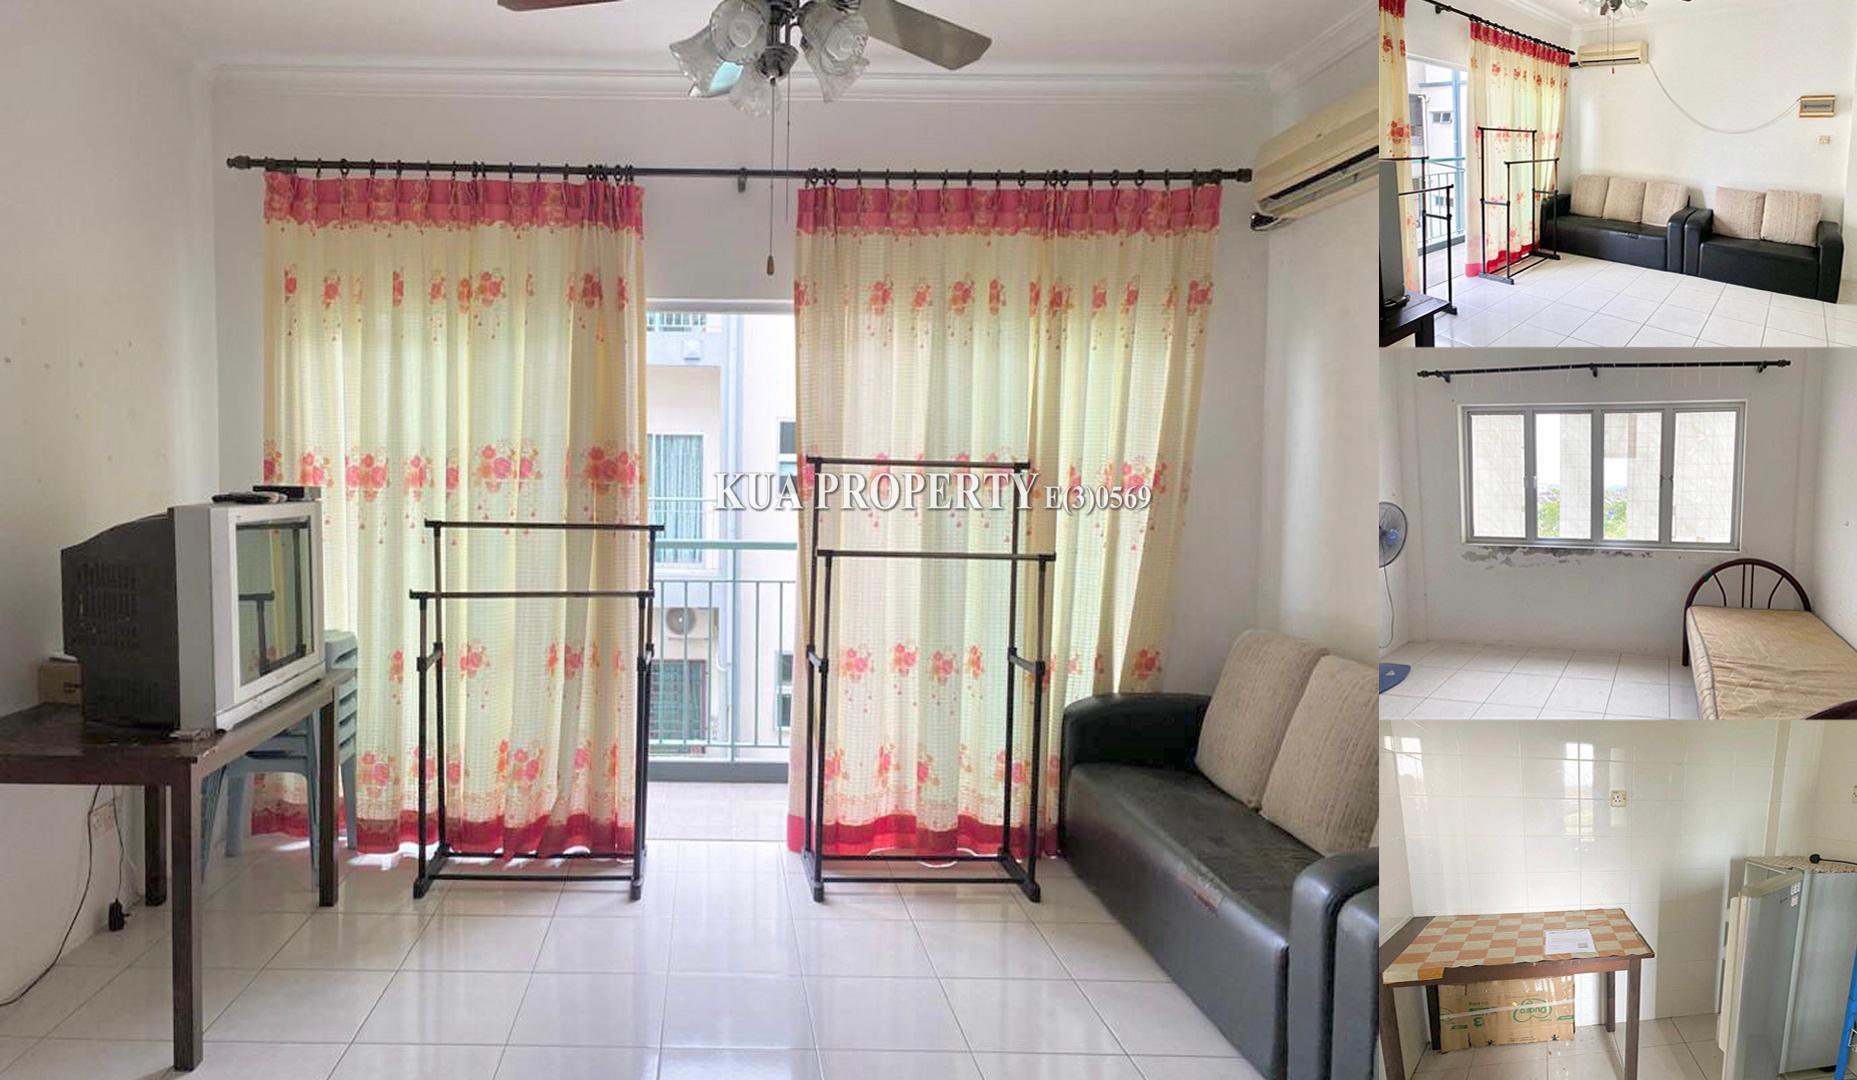 2nd Floor Unisquare Apartment For Sale! at Kota Samarahan